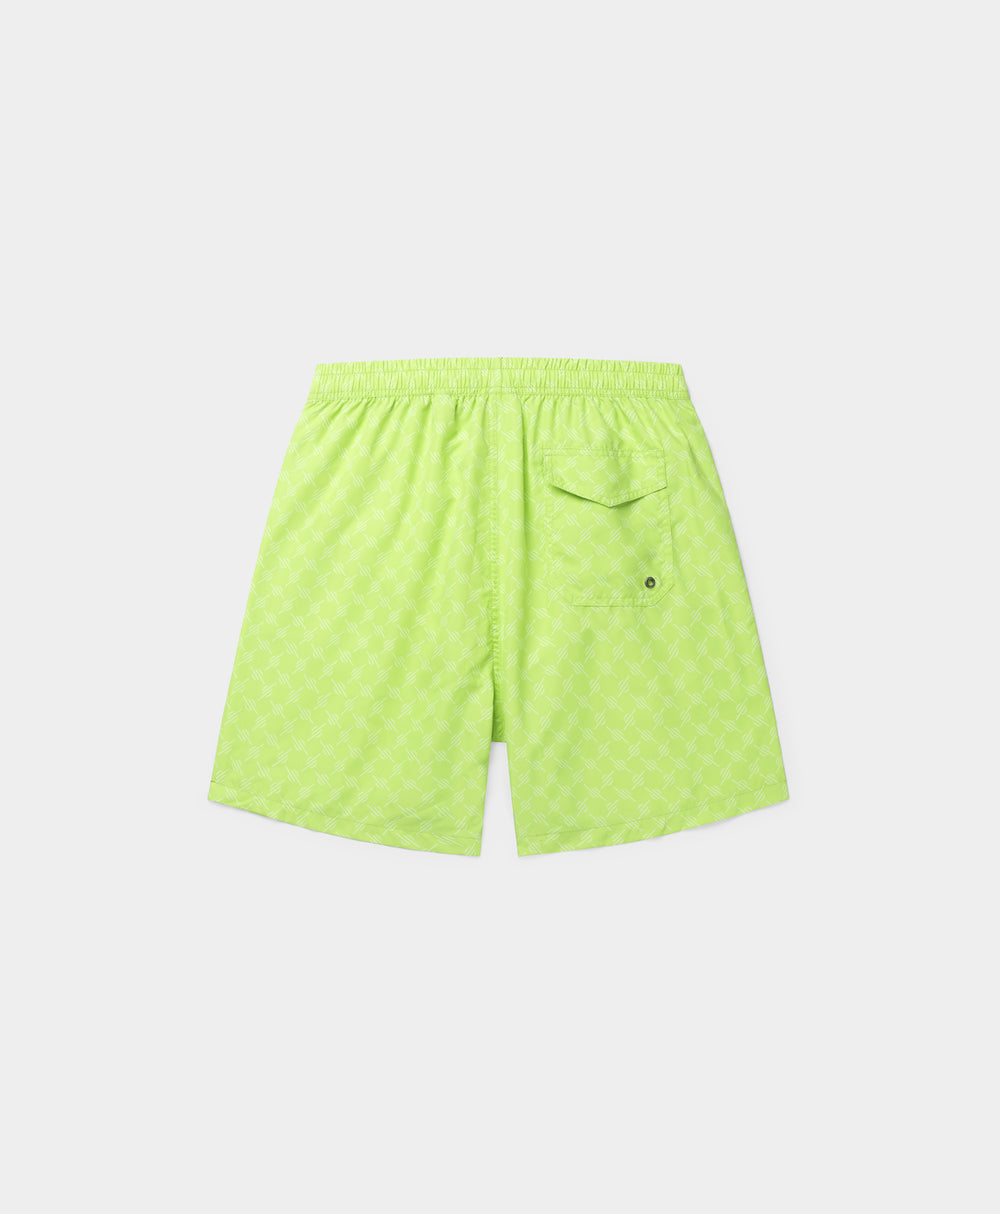 DP - Daiquiri Green Kato Monogram Swimshorts - Packshot - Rear